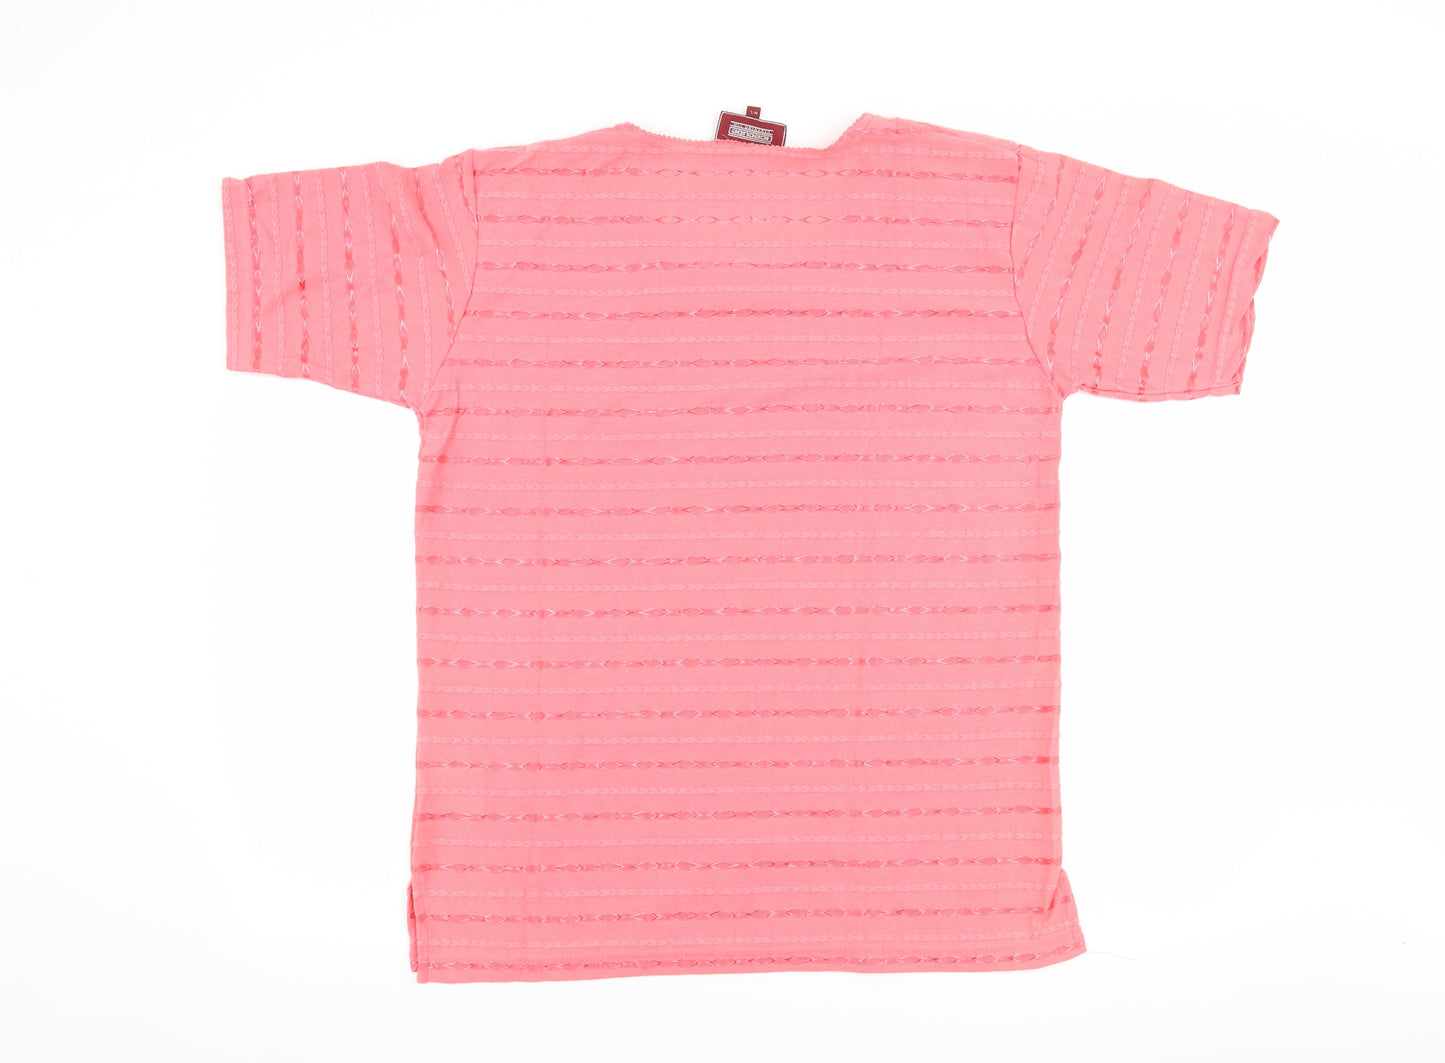 Icecube Womens Pink Striped  Basic T-Shirt Size M